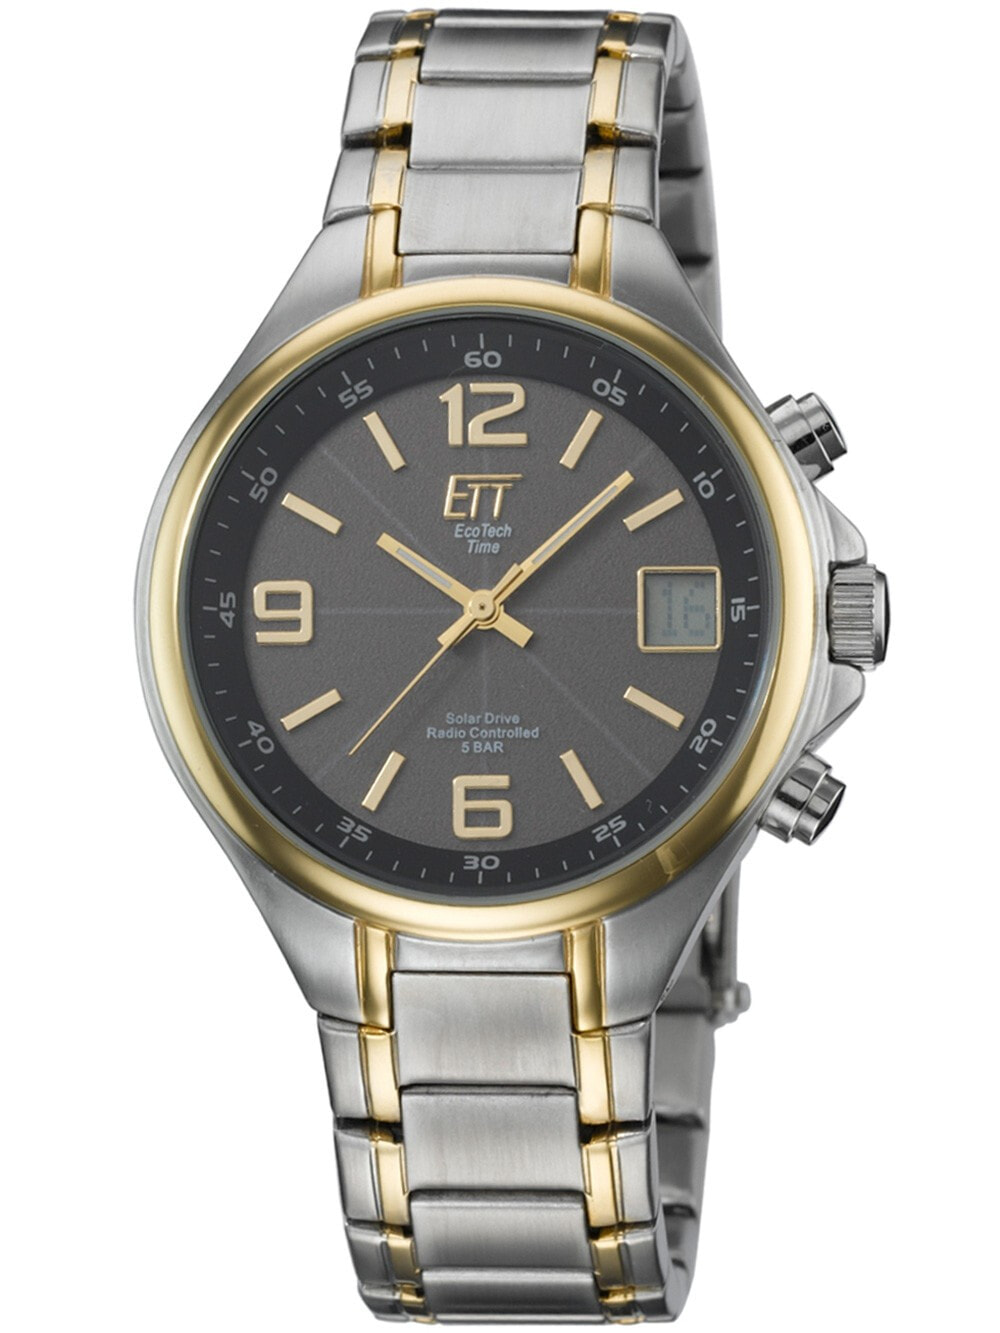 Мужские наручные часы с серебряным браслетом ETT EGS-11036-51M Solar Drive Radio Controlled Basic Mens 40mm 5ATM